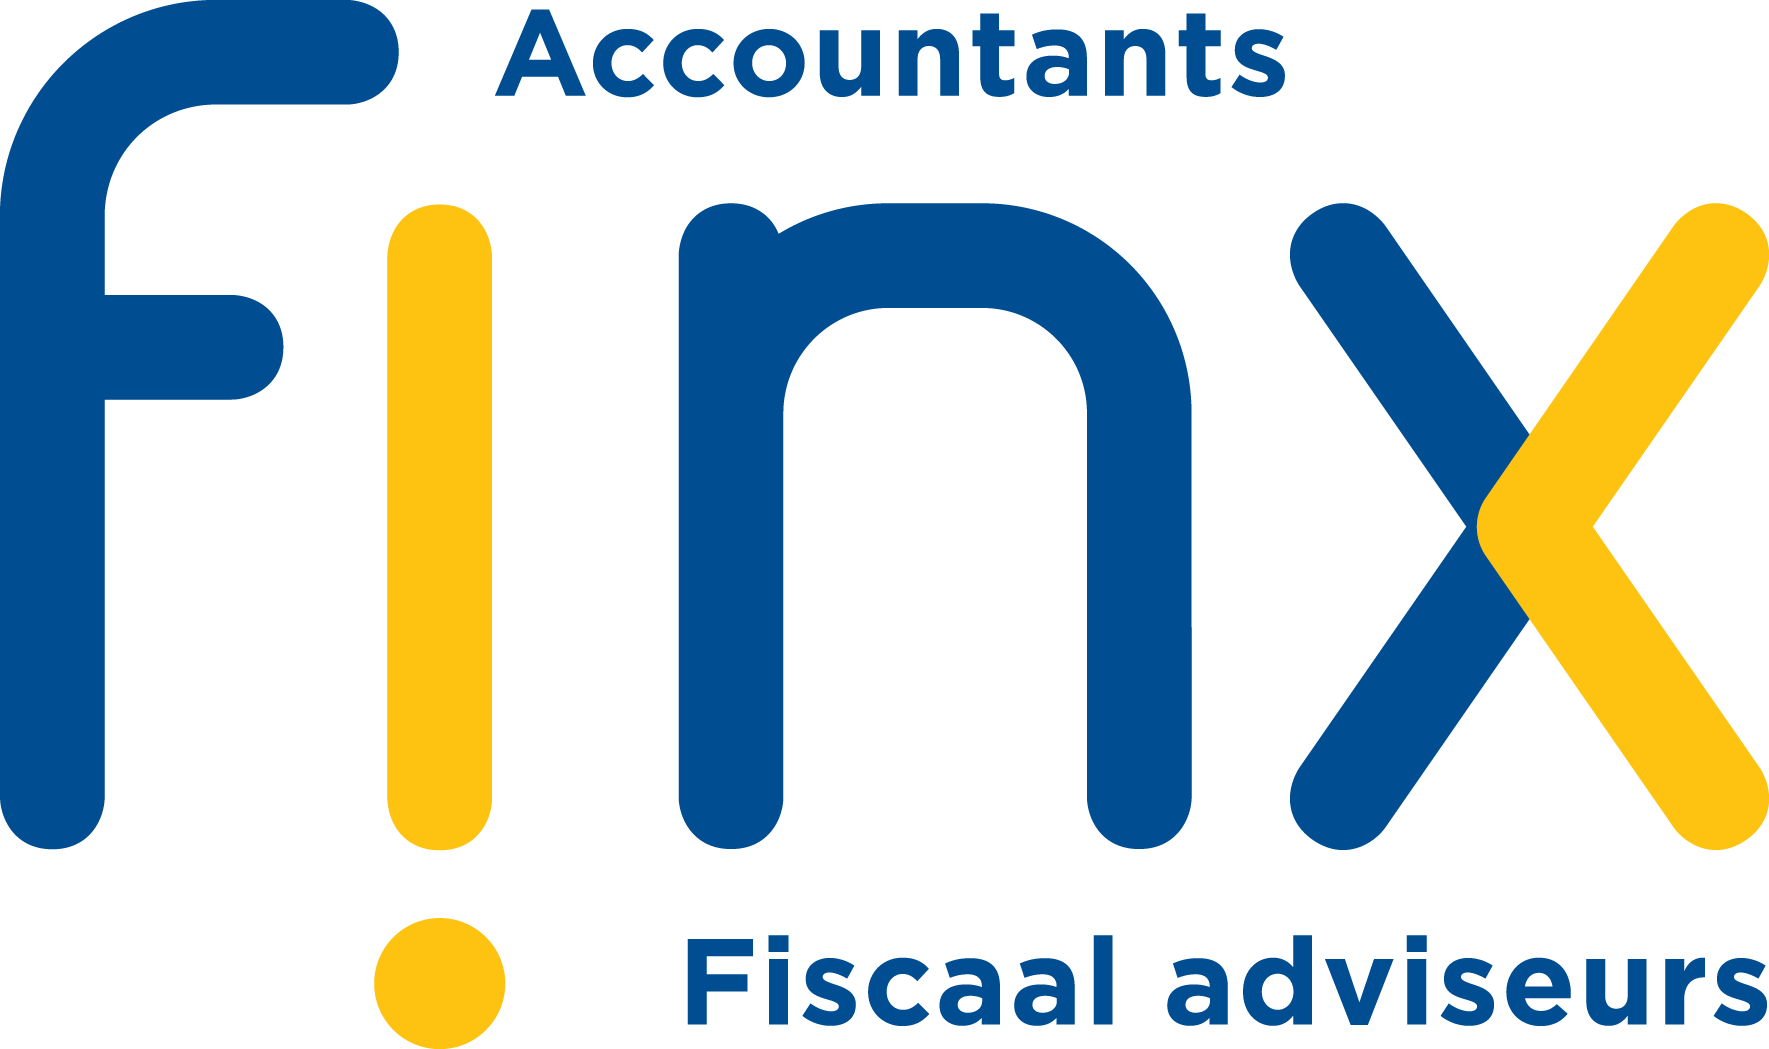 Finx Accountants & Belastingadviseurs B.V.